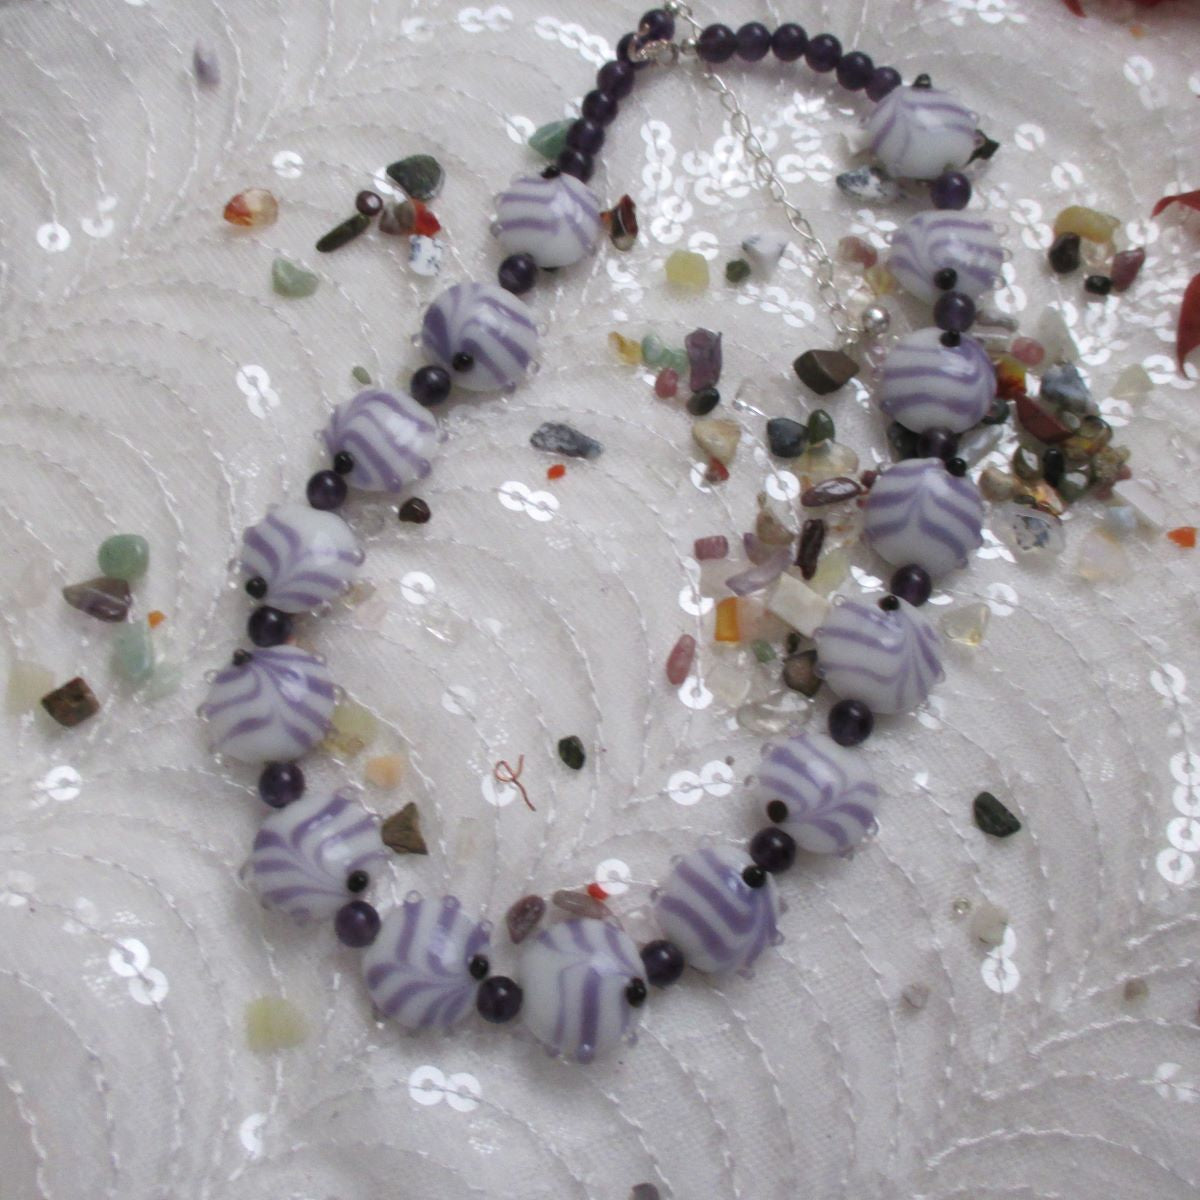 Handmade Artisan Bead Necklace Amethyst and White Swirled - VP's Jewelry 